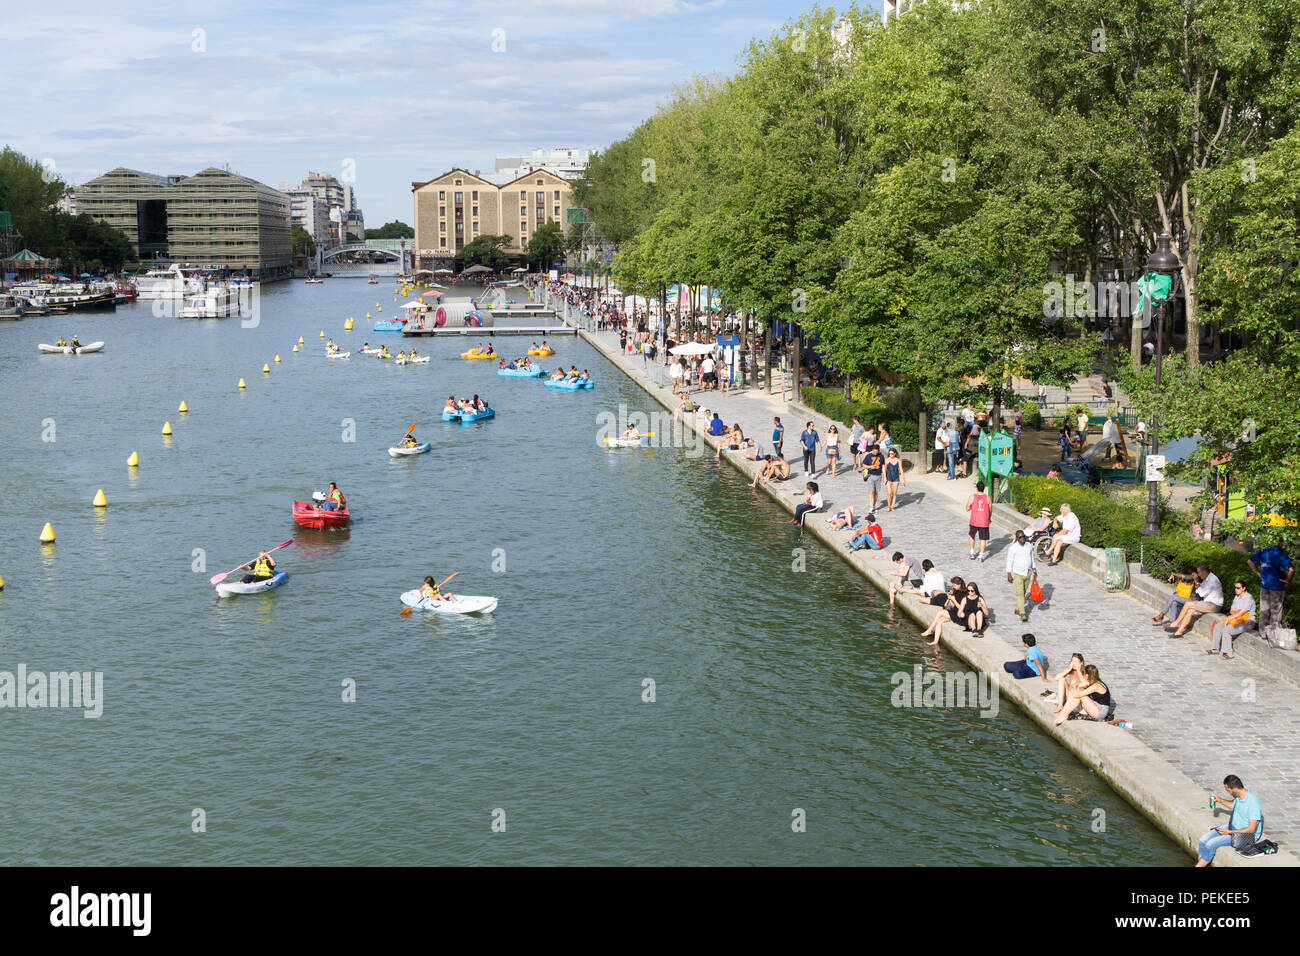 Paris summer - leisure activities take place each summer at the Bassin de la Villette, artificial lake in the 19th arrondissement. Stock Photo